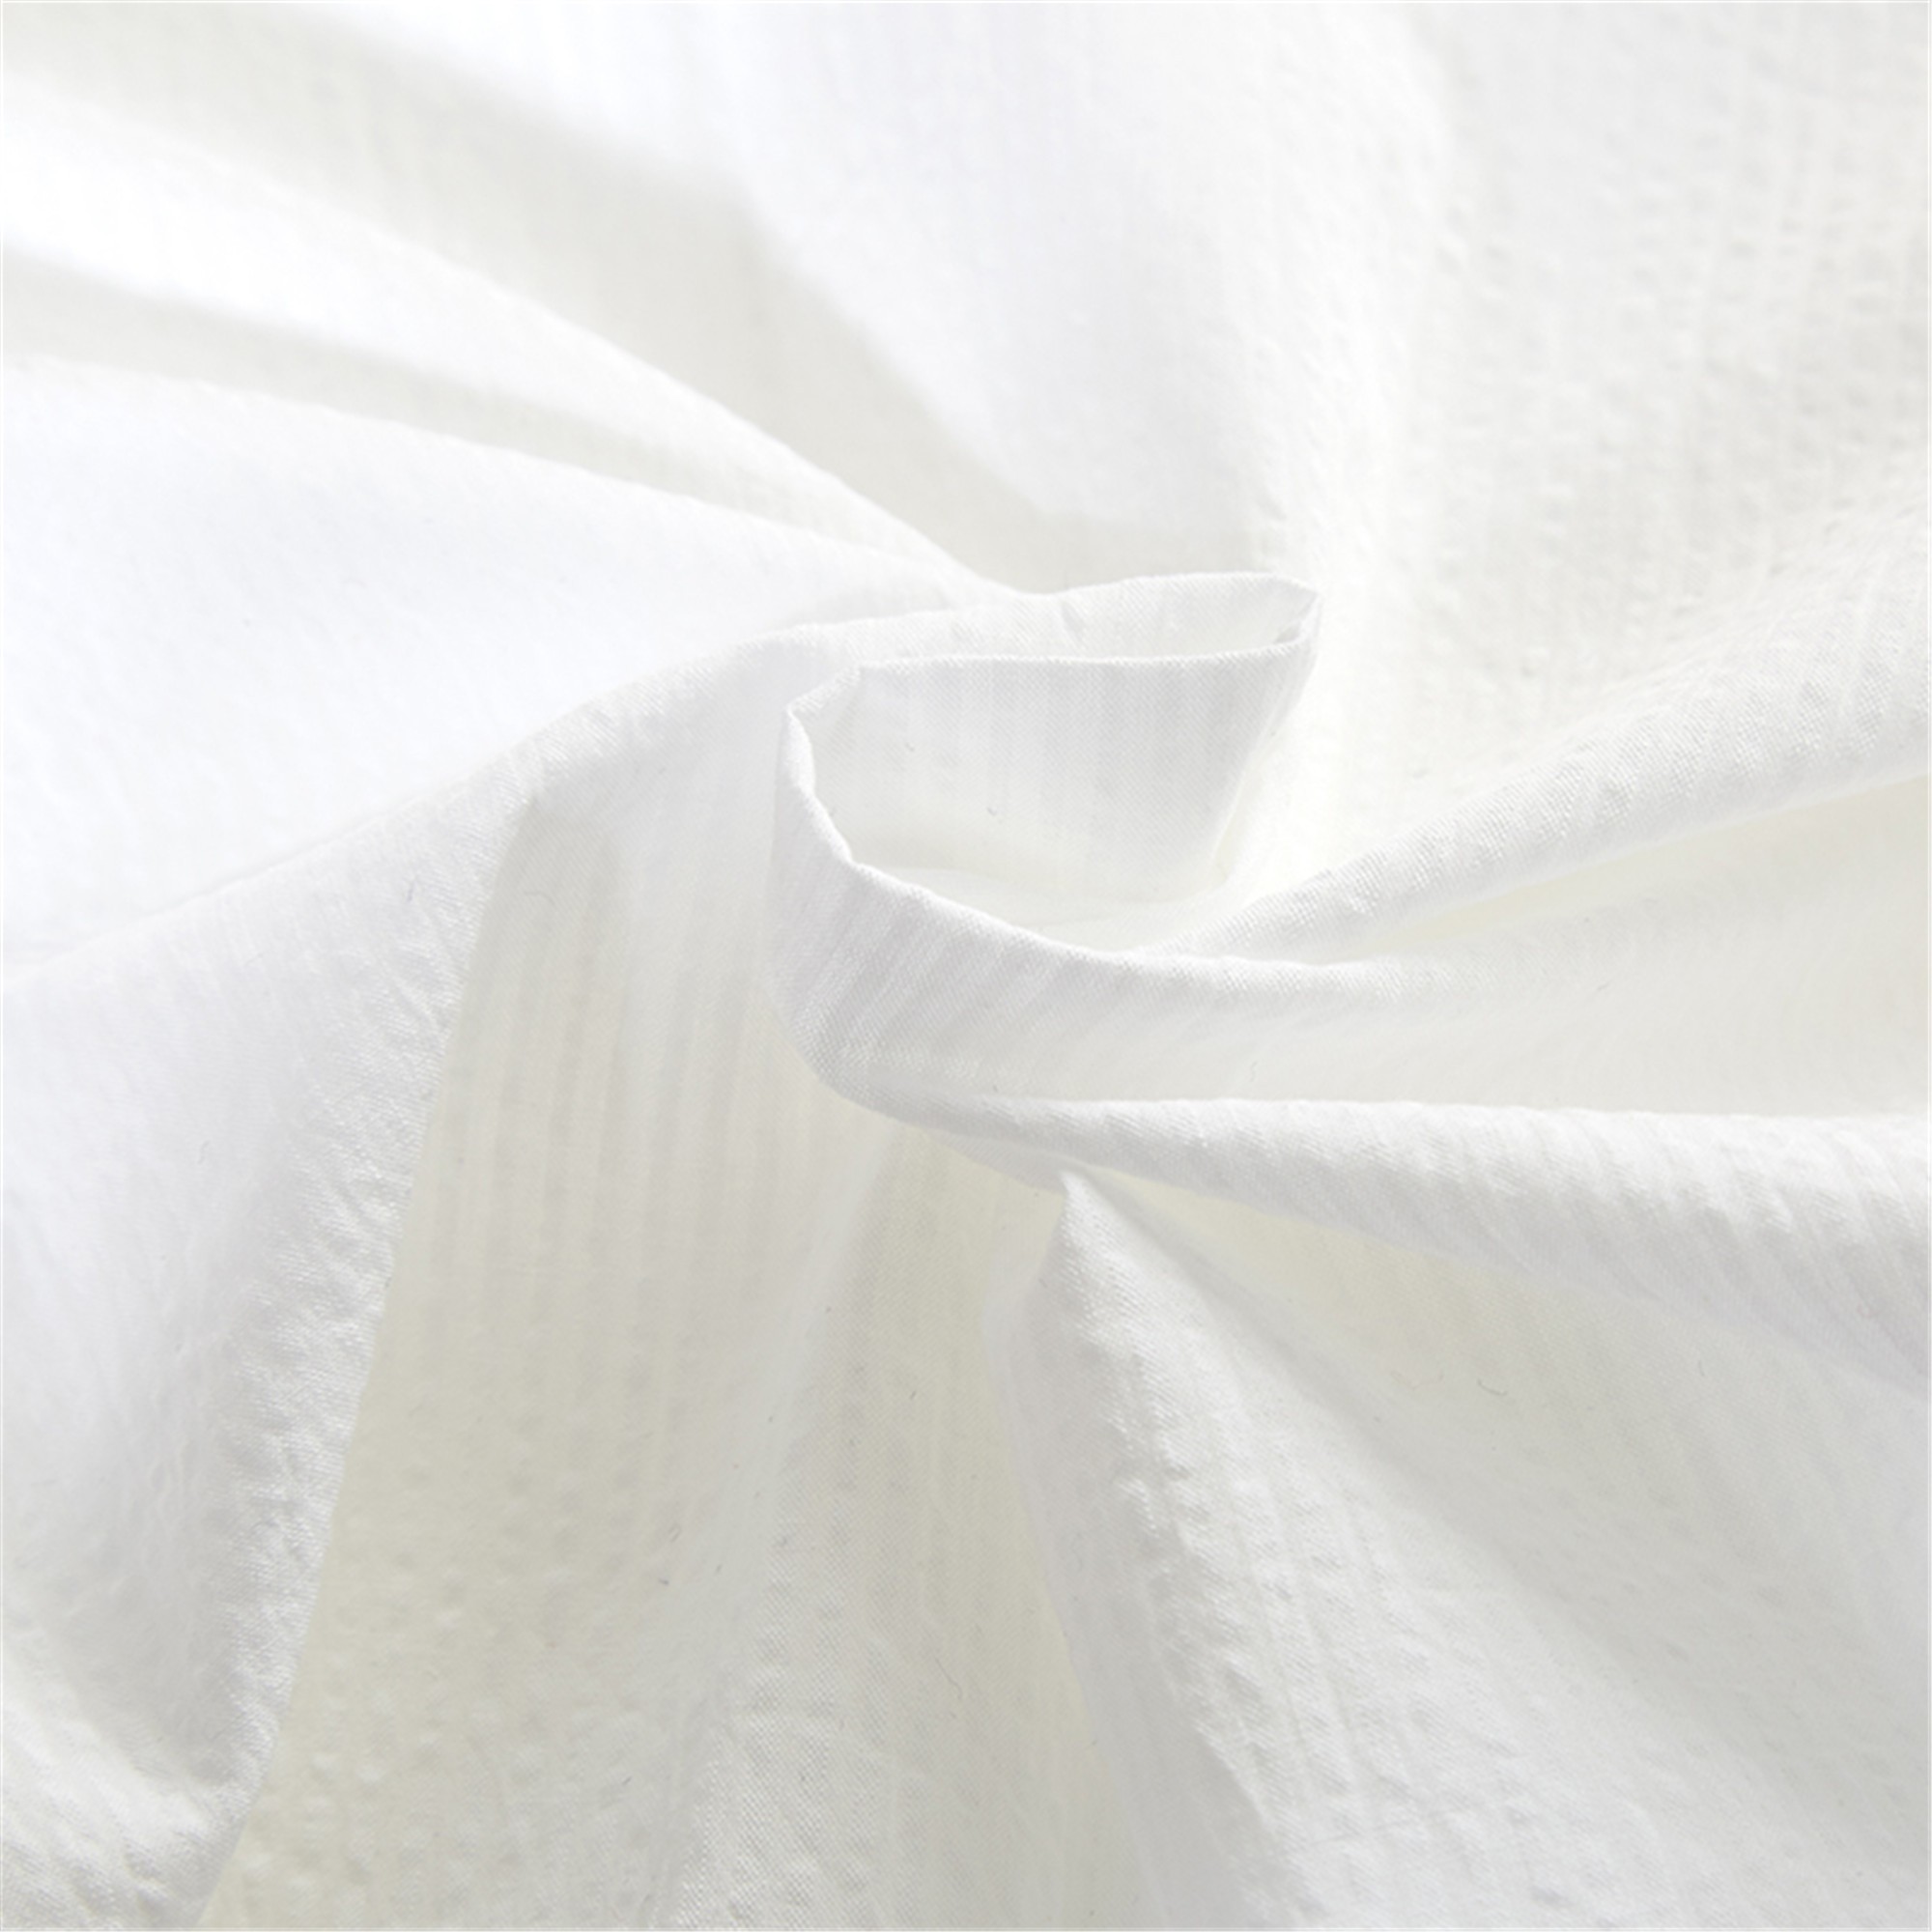 Superventa de hilo de algodón teñido Seersucker tela sólida e impresa para camisas